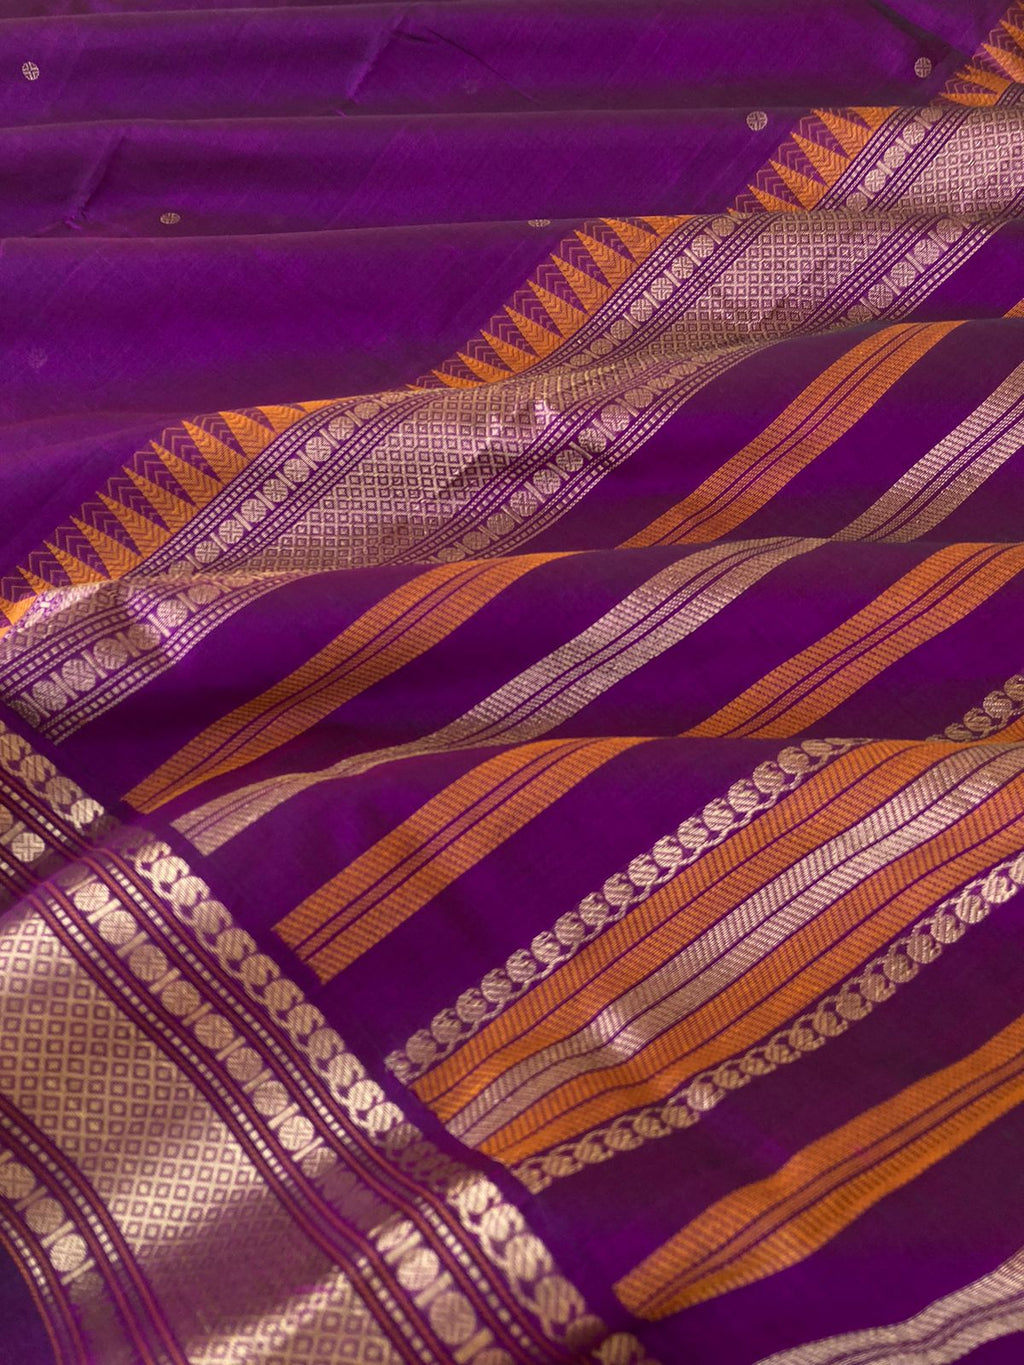 Zari Kissed Silk Cotton - deep dark purple with solid mayil kann woven borders